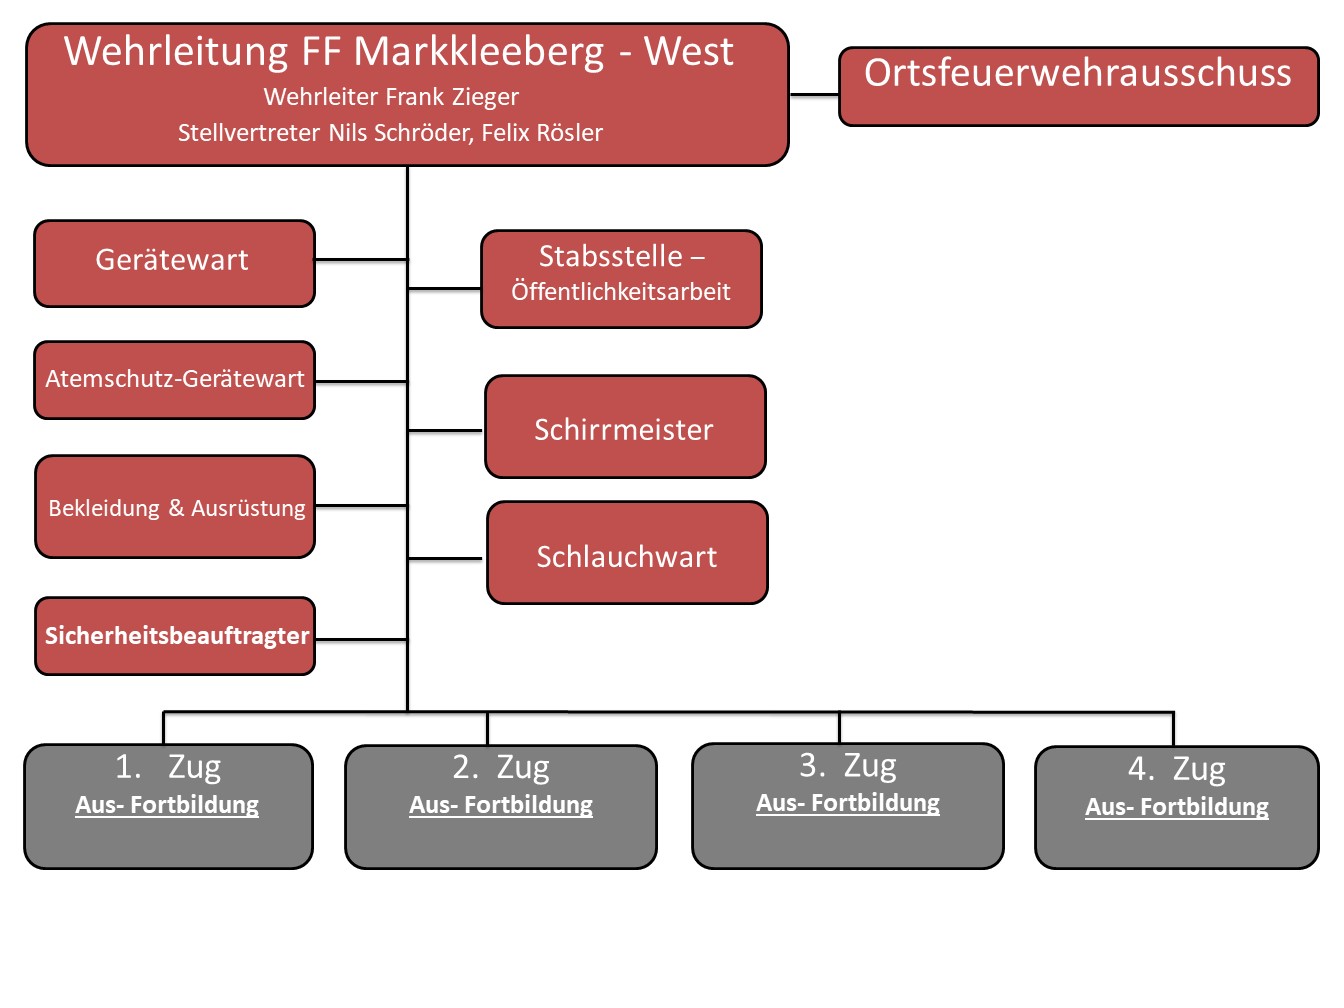 Organigramm FF Markkleeberg West